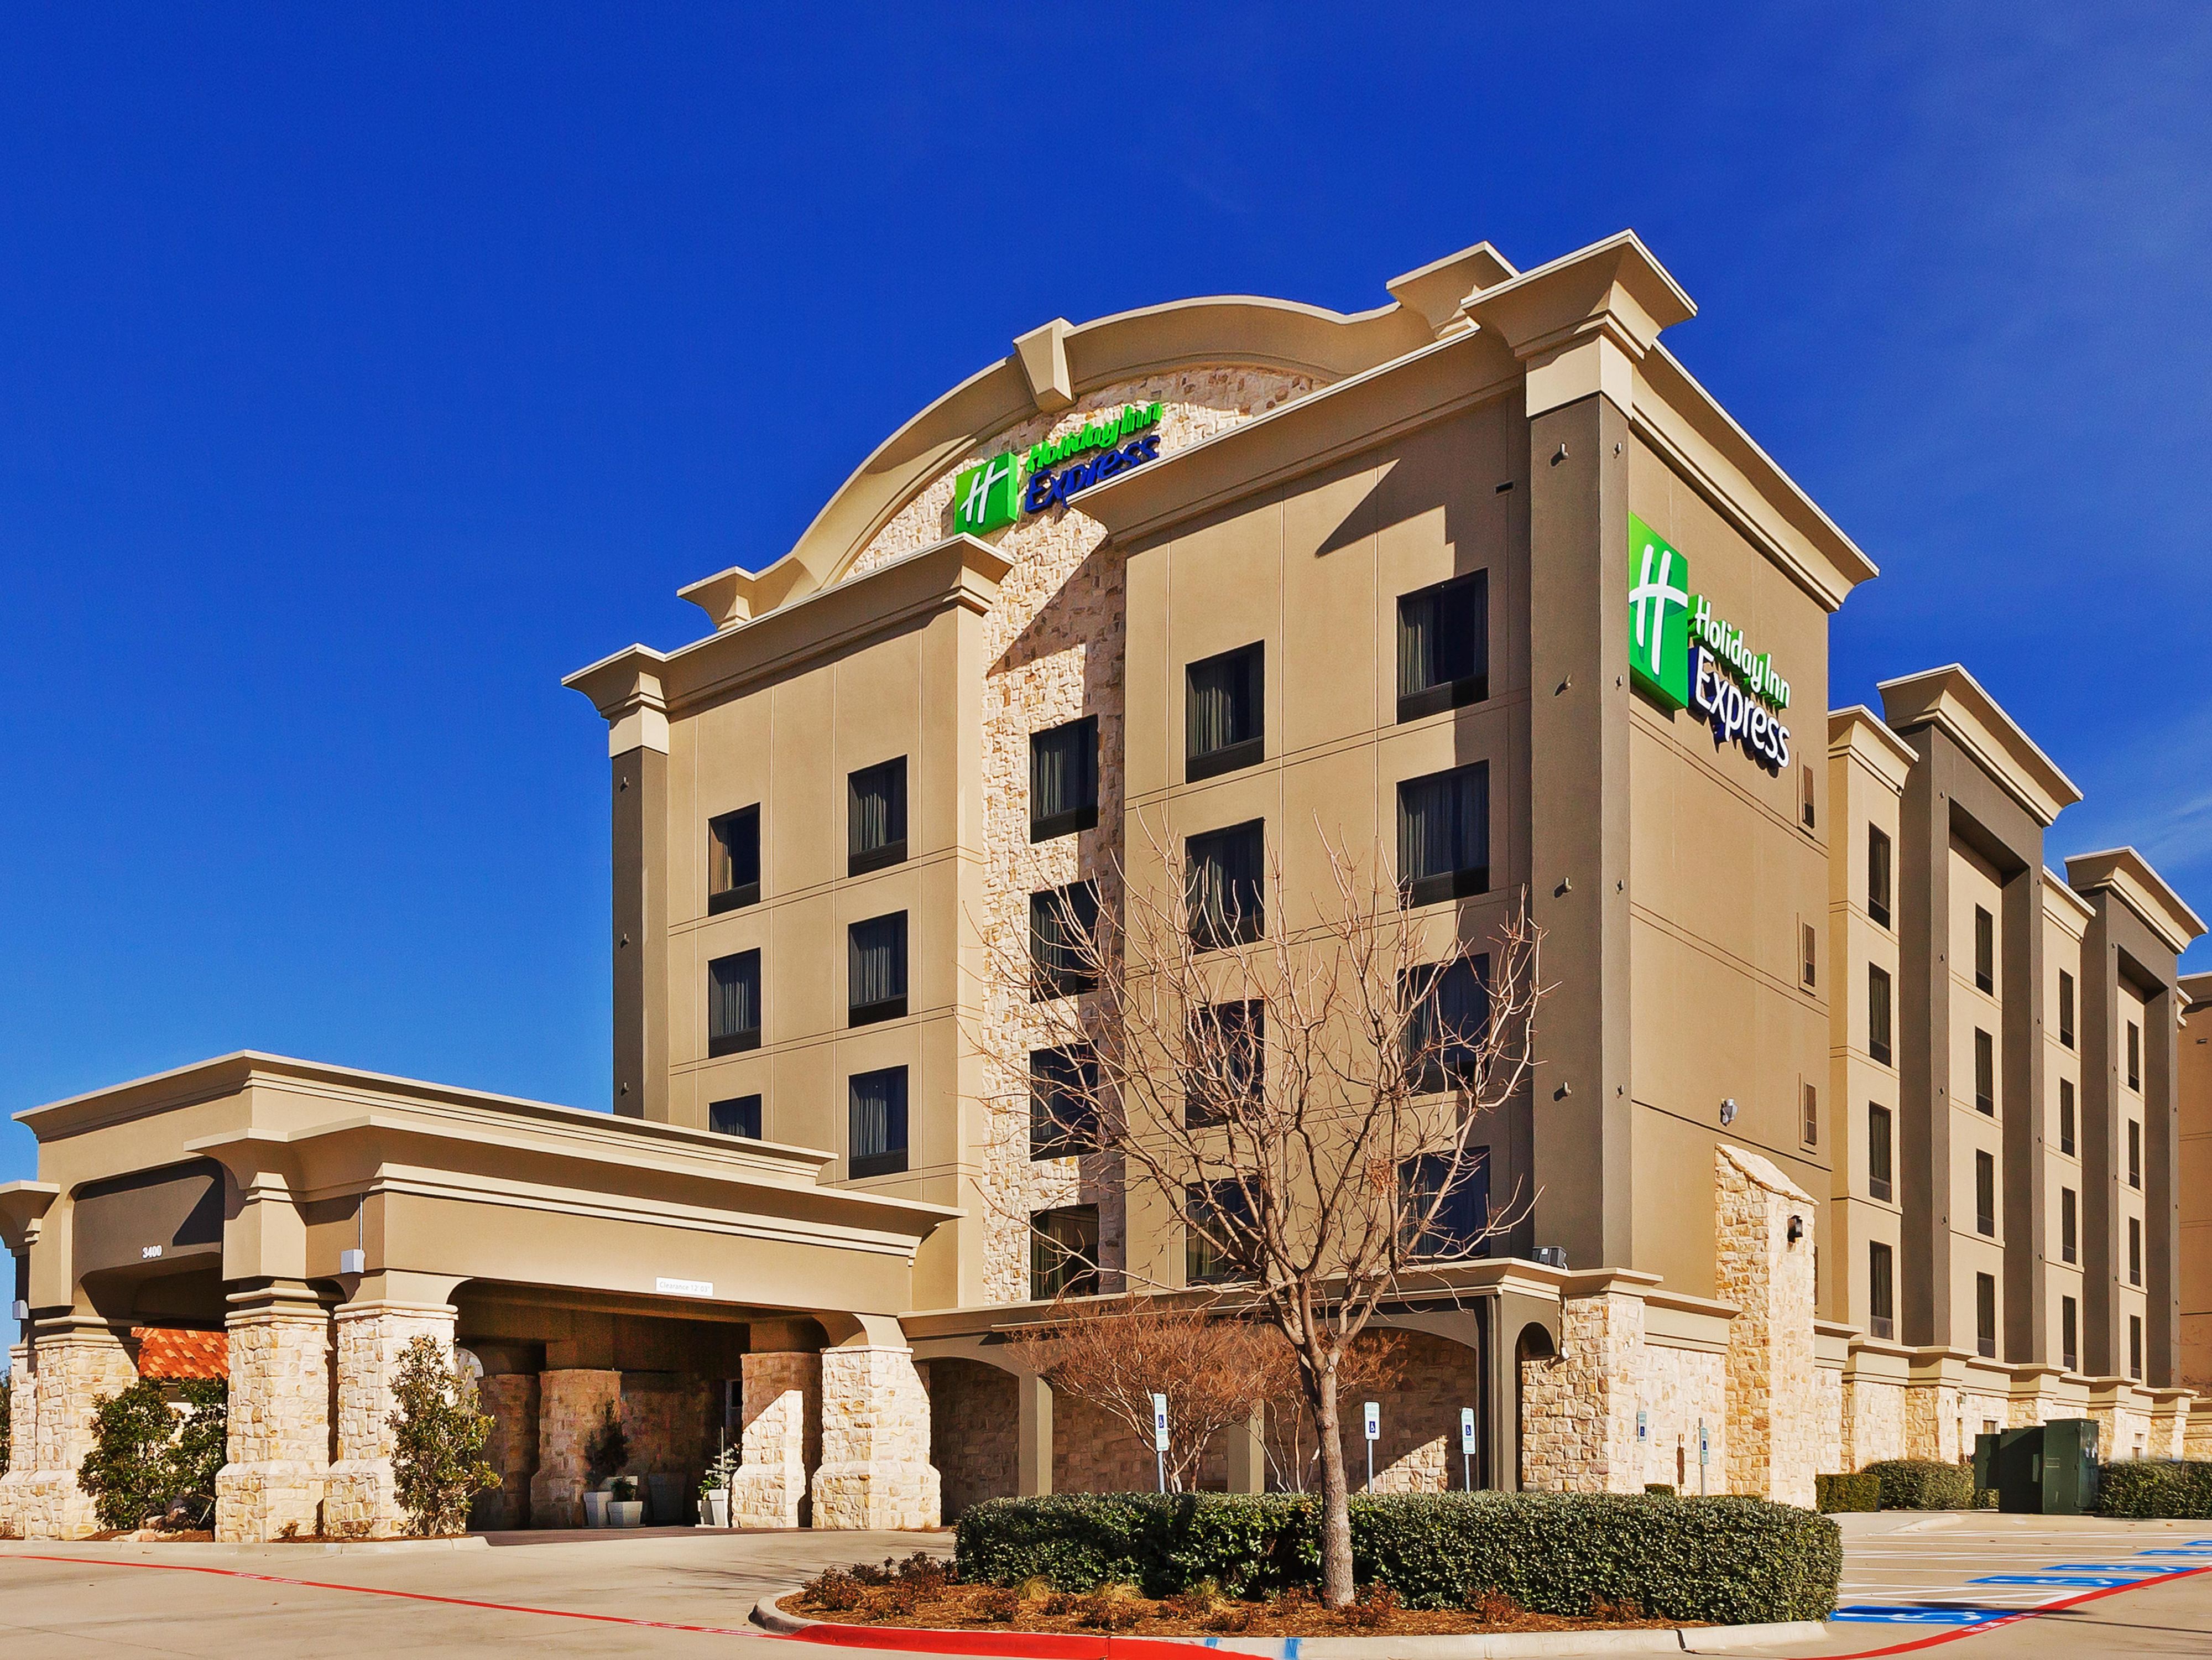 North Dallas Hotels in Frisco, TX Holiday Inn Express Frisco